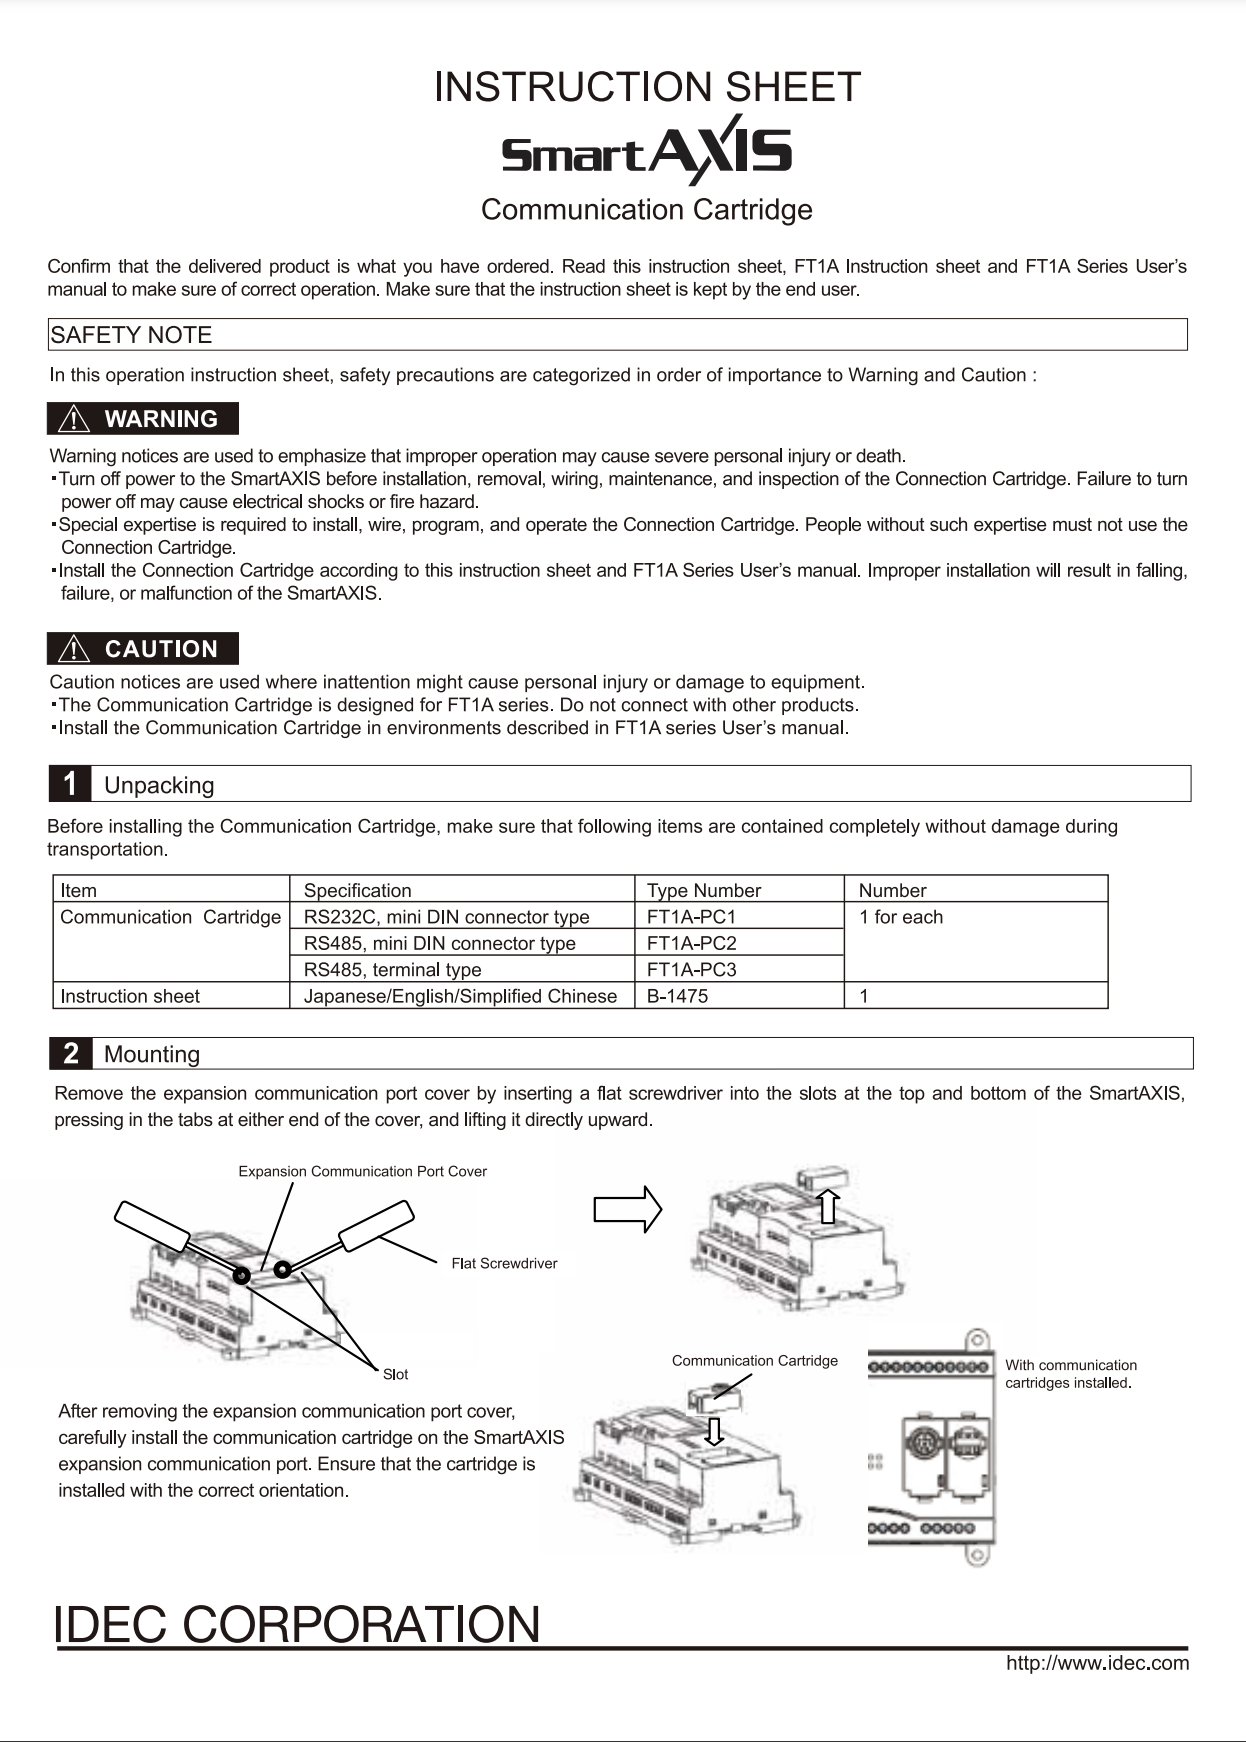 IDEC FT1A SmartAXIS Communication Cartridge Instruction Sheet